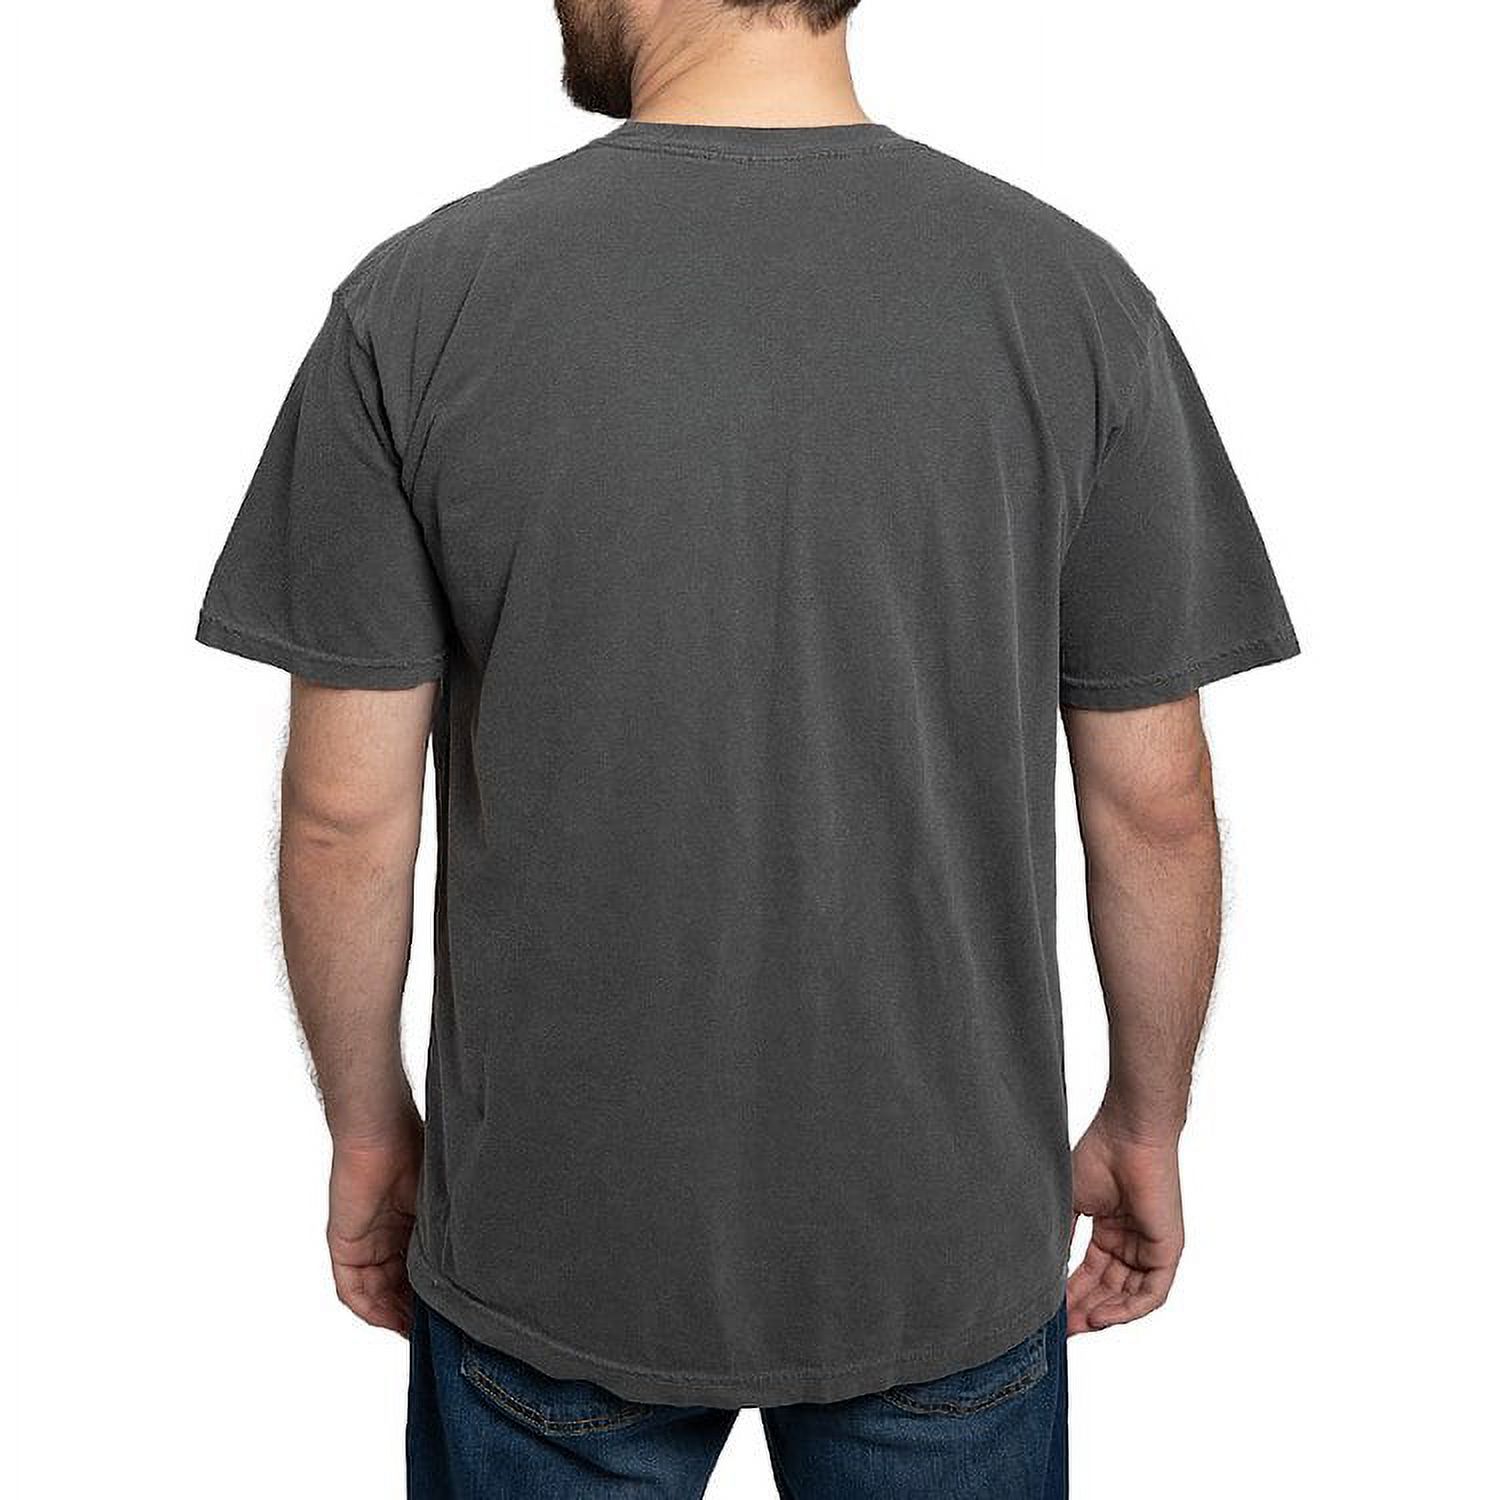 CafePress - Black Lab Vs Wife - Mens Comfort Colors Shirt - image 2 of 5